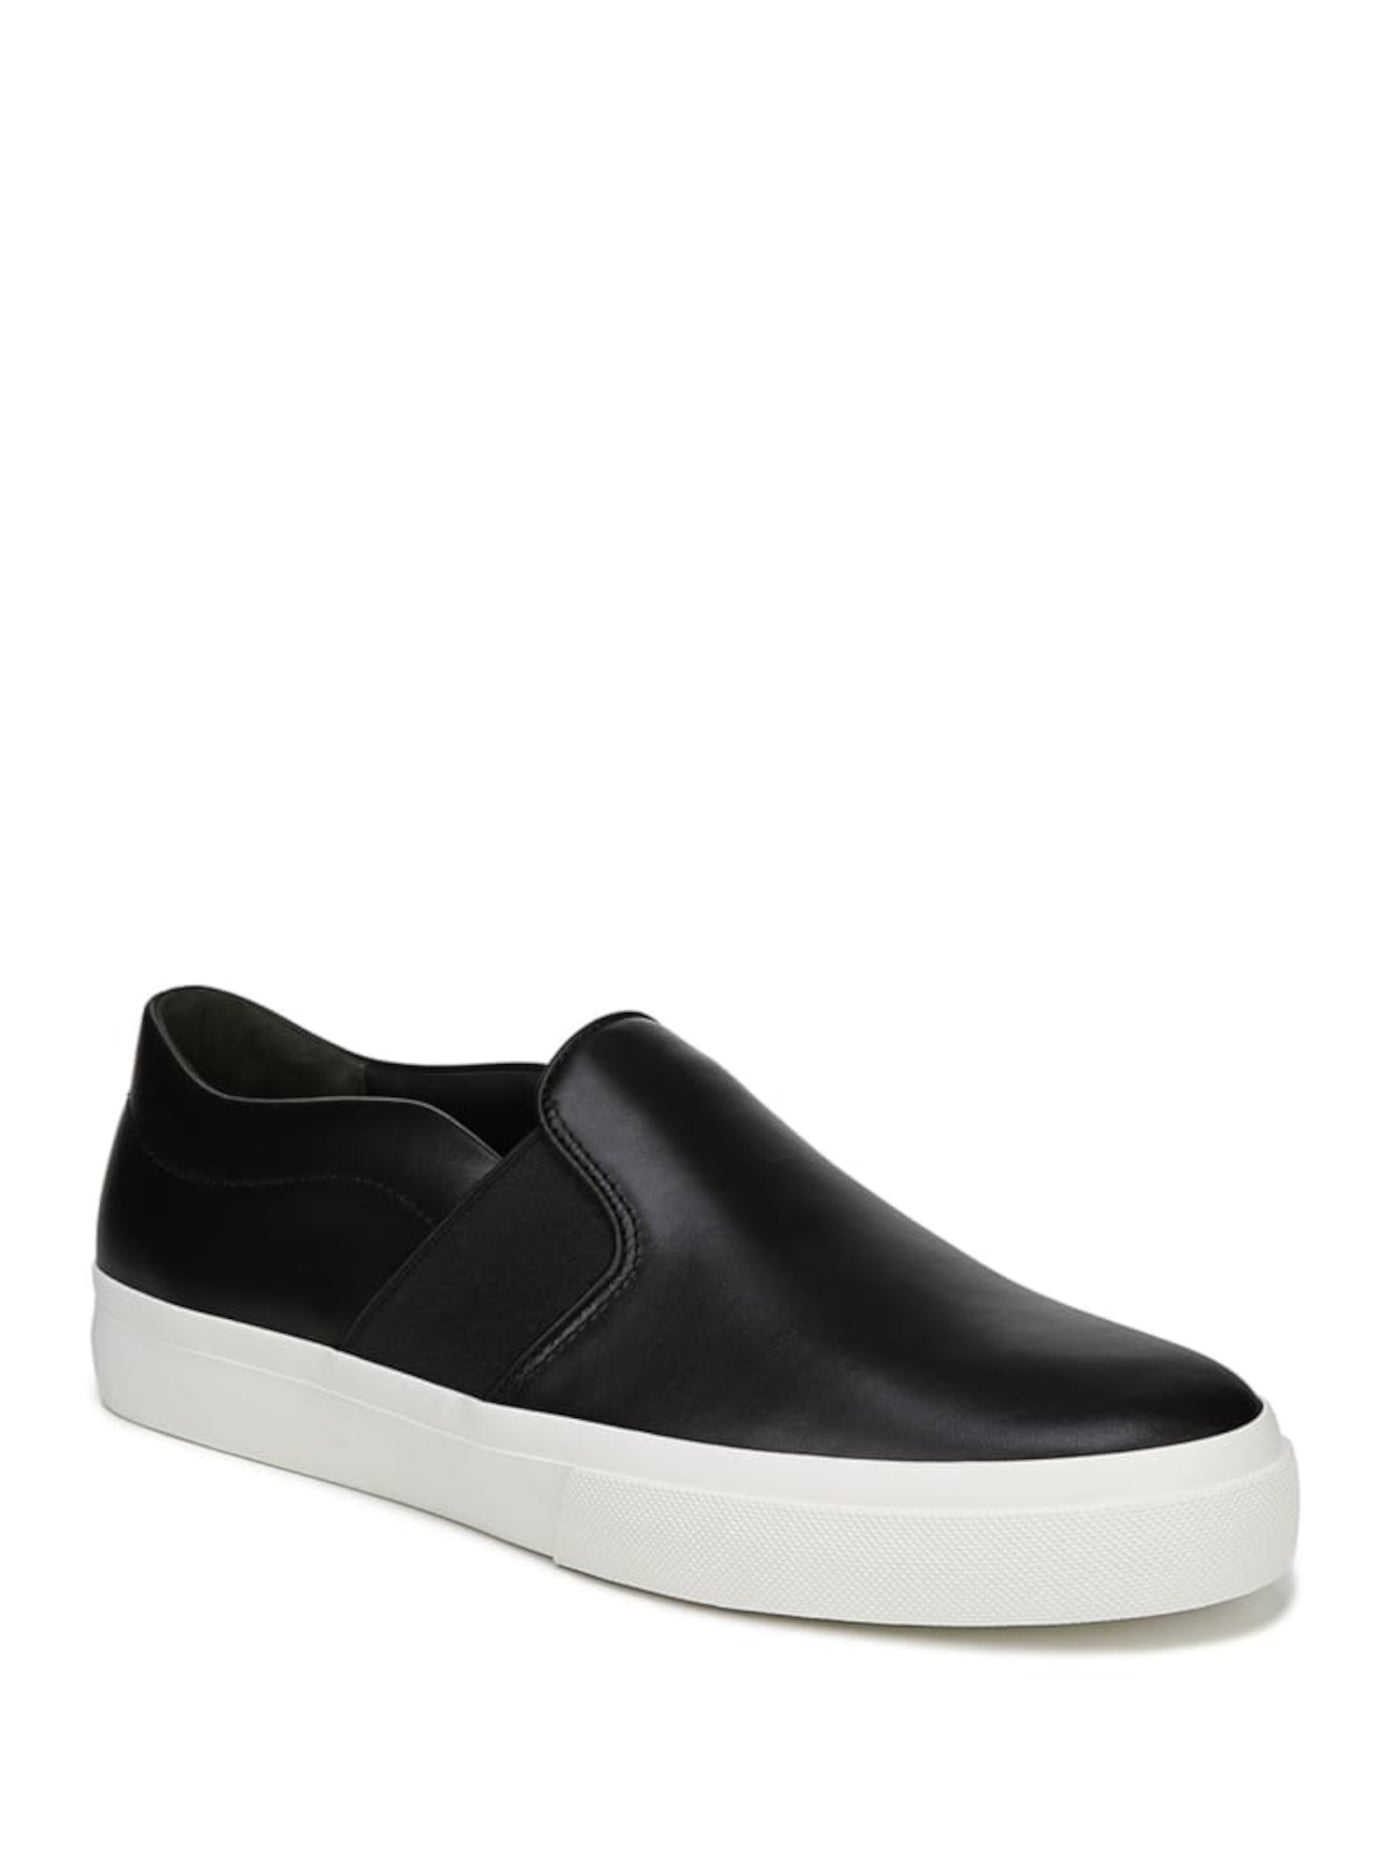 VINCE. Mens Black Goring Comfort Fenton Round Toe Platform Slip On Leather Sneakers Shoes 10 M